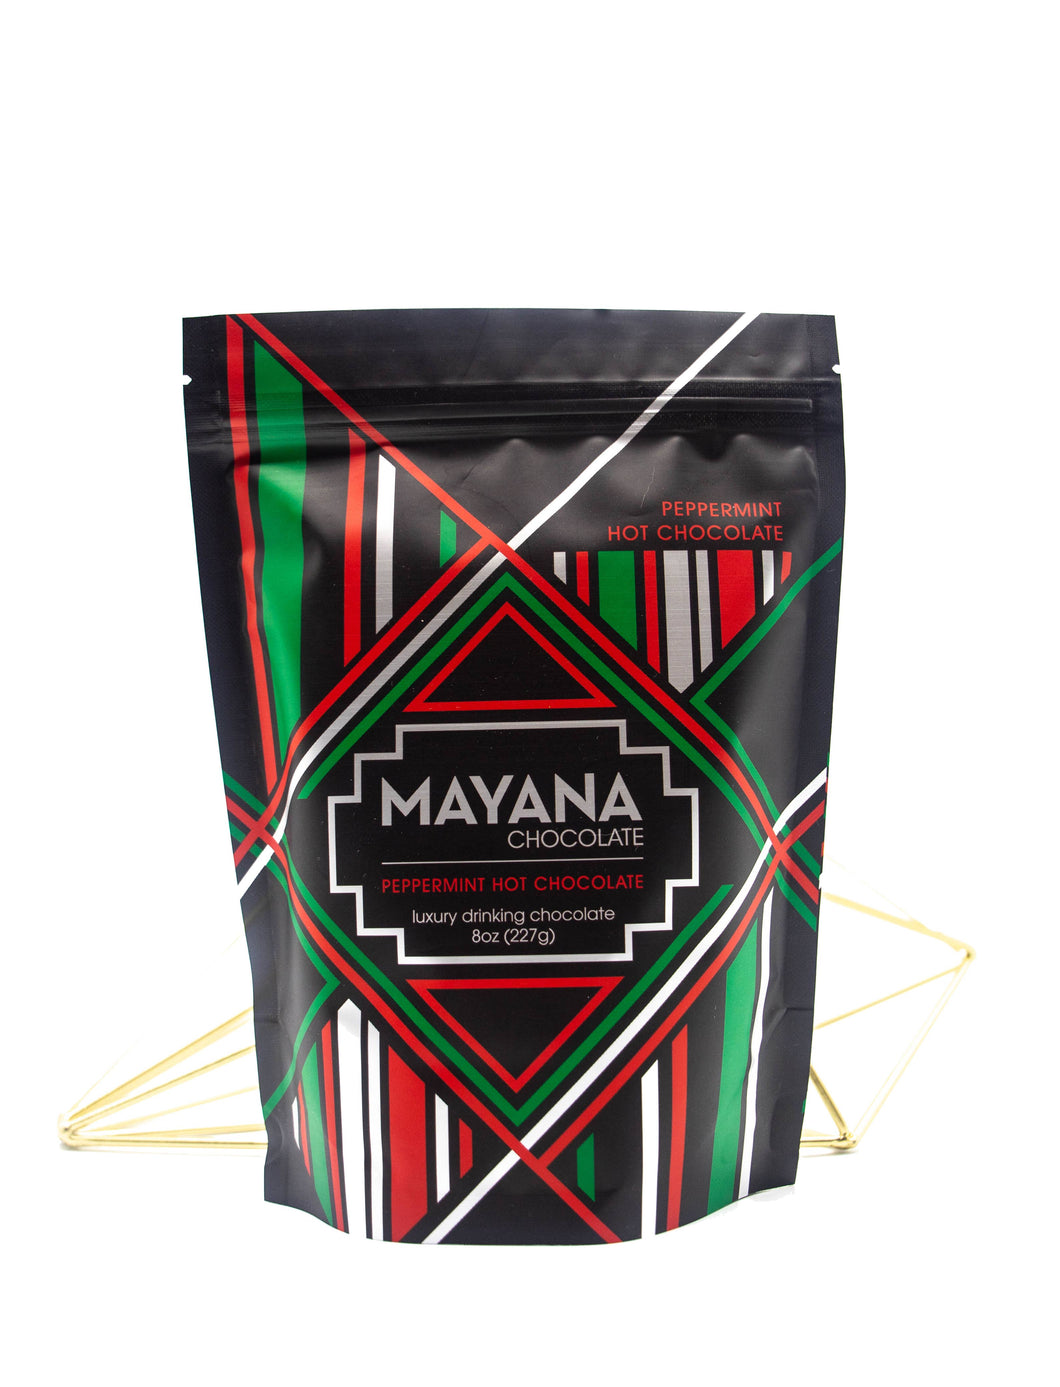 Mayana Chocolate - Peppermint Hot Chocolate